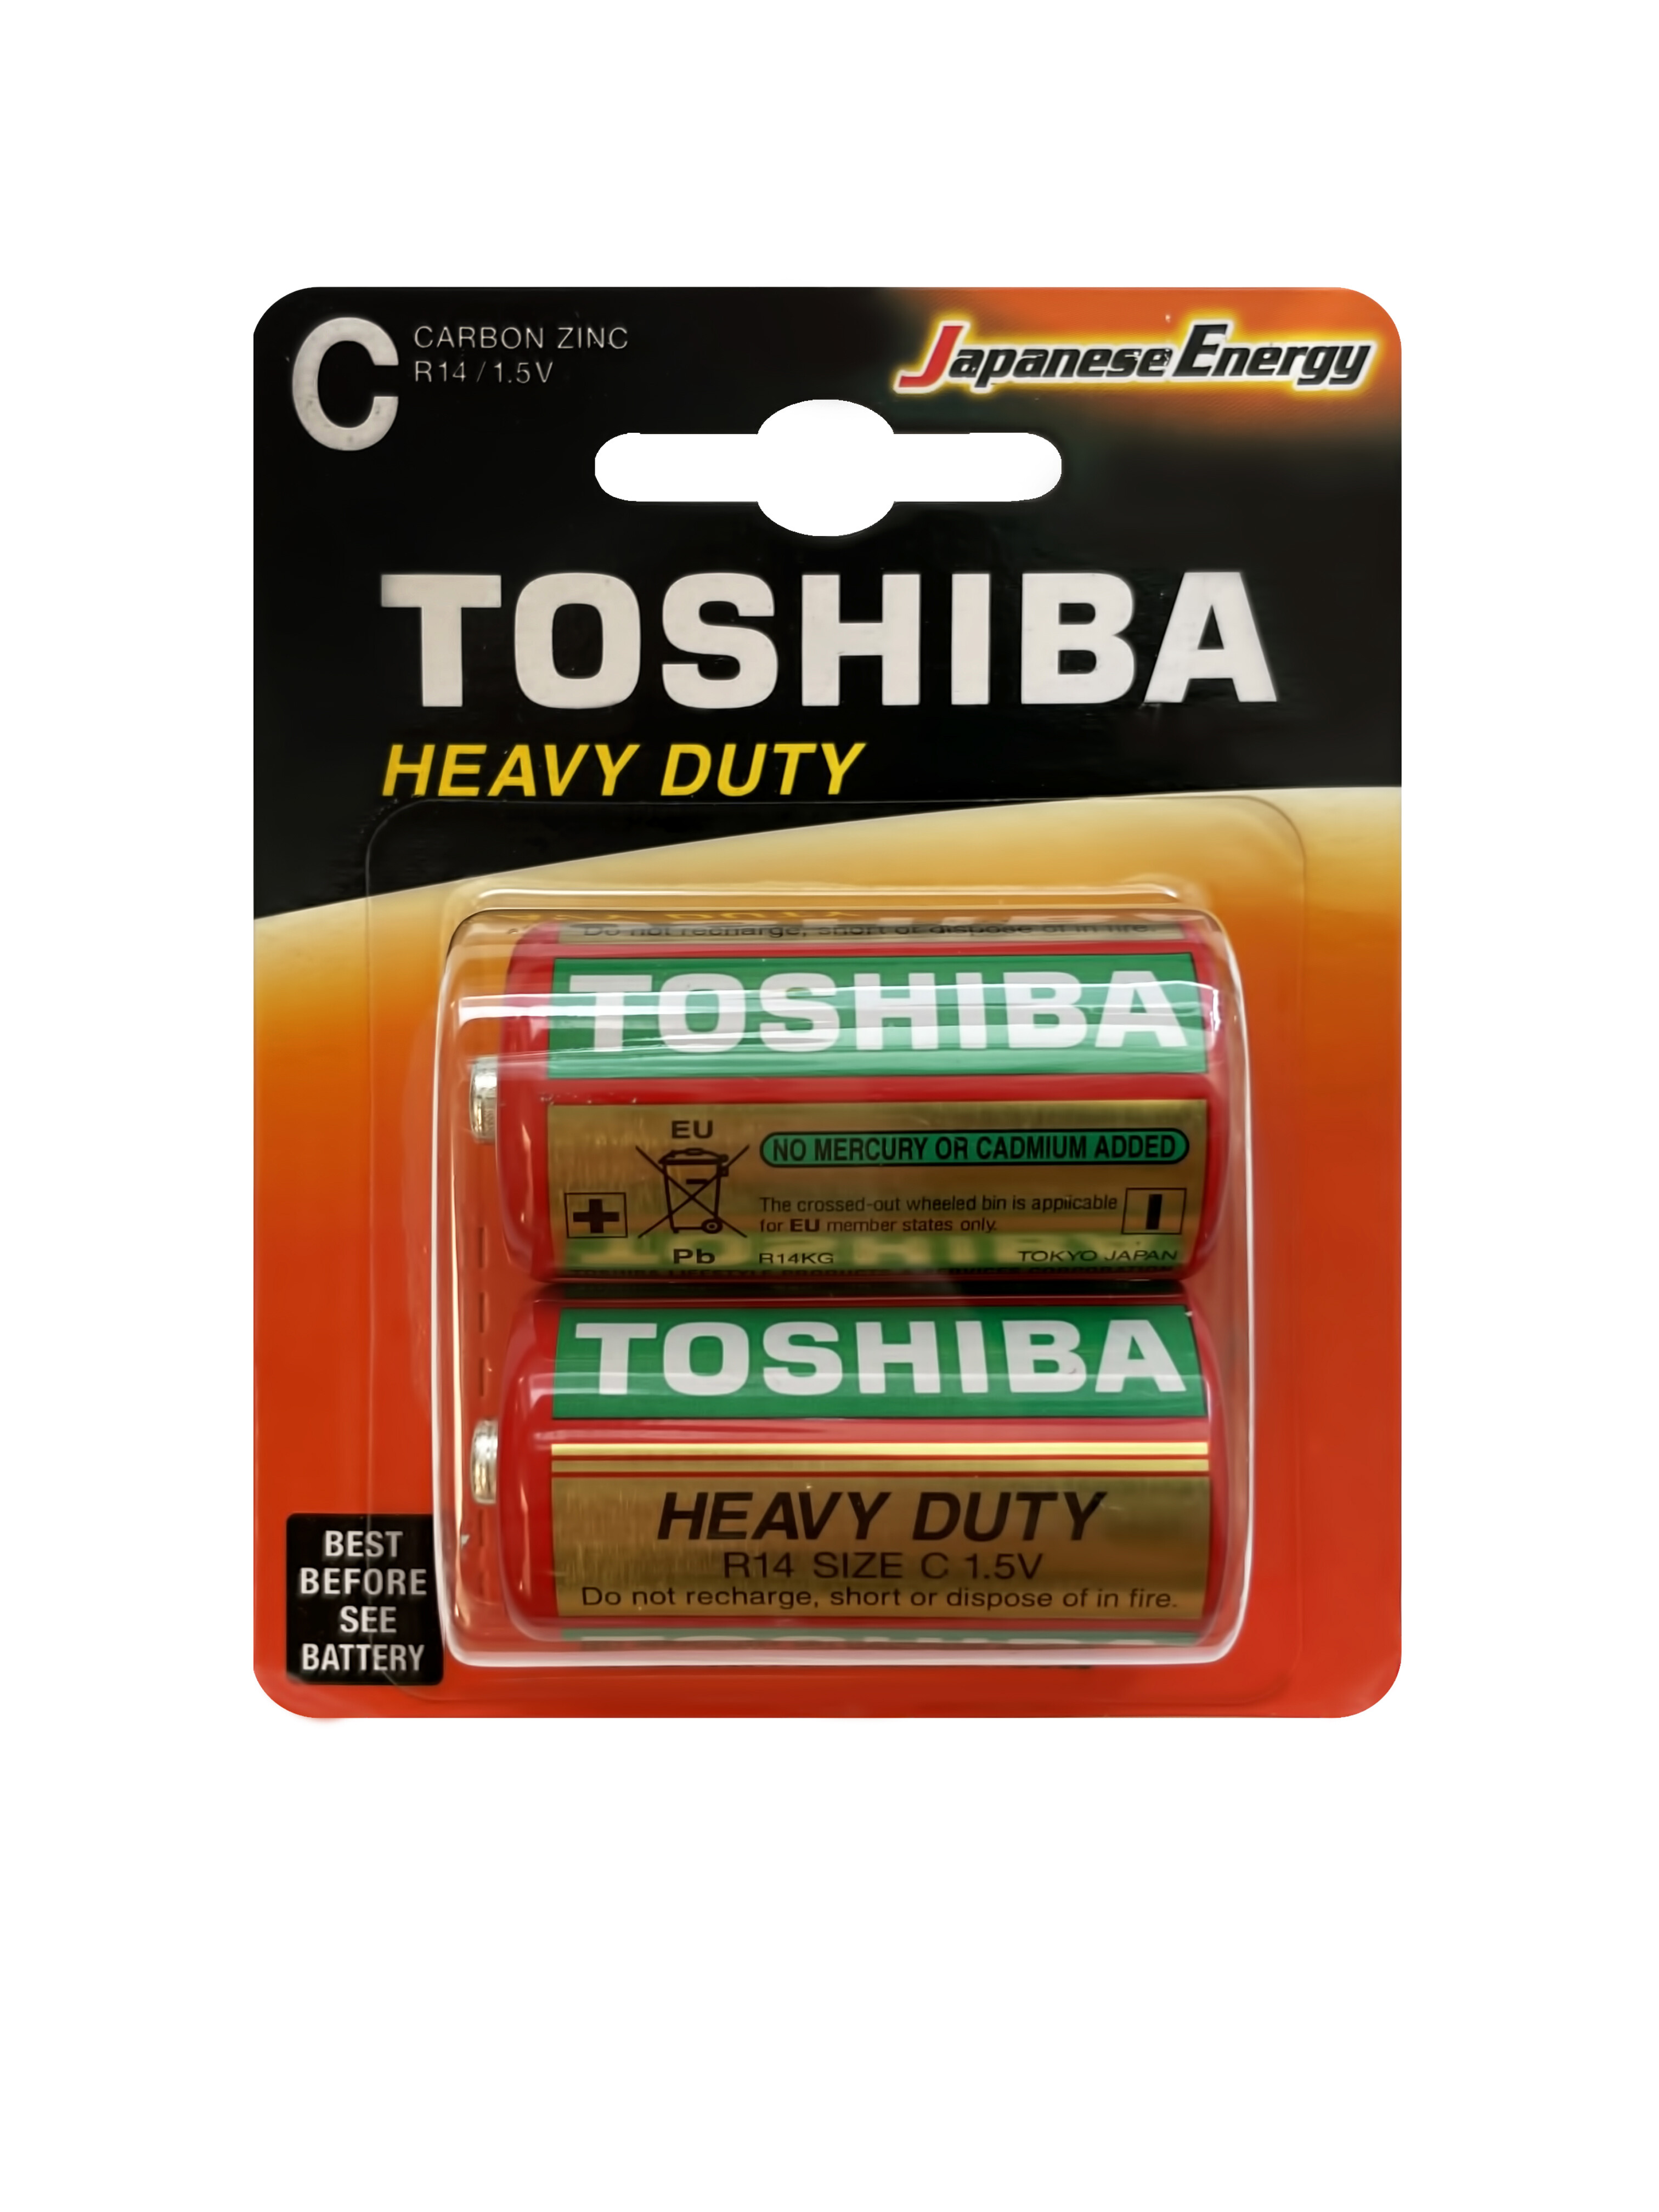 Батарейки Toshiba R14 солевые (zinc) ДЮЙМОВОЧКА Heavy Duty (2шт) C 1,5V батарейкиtoshiba r03 солевые zinc мизинчик heavy duty 2шт aaa 1 5v